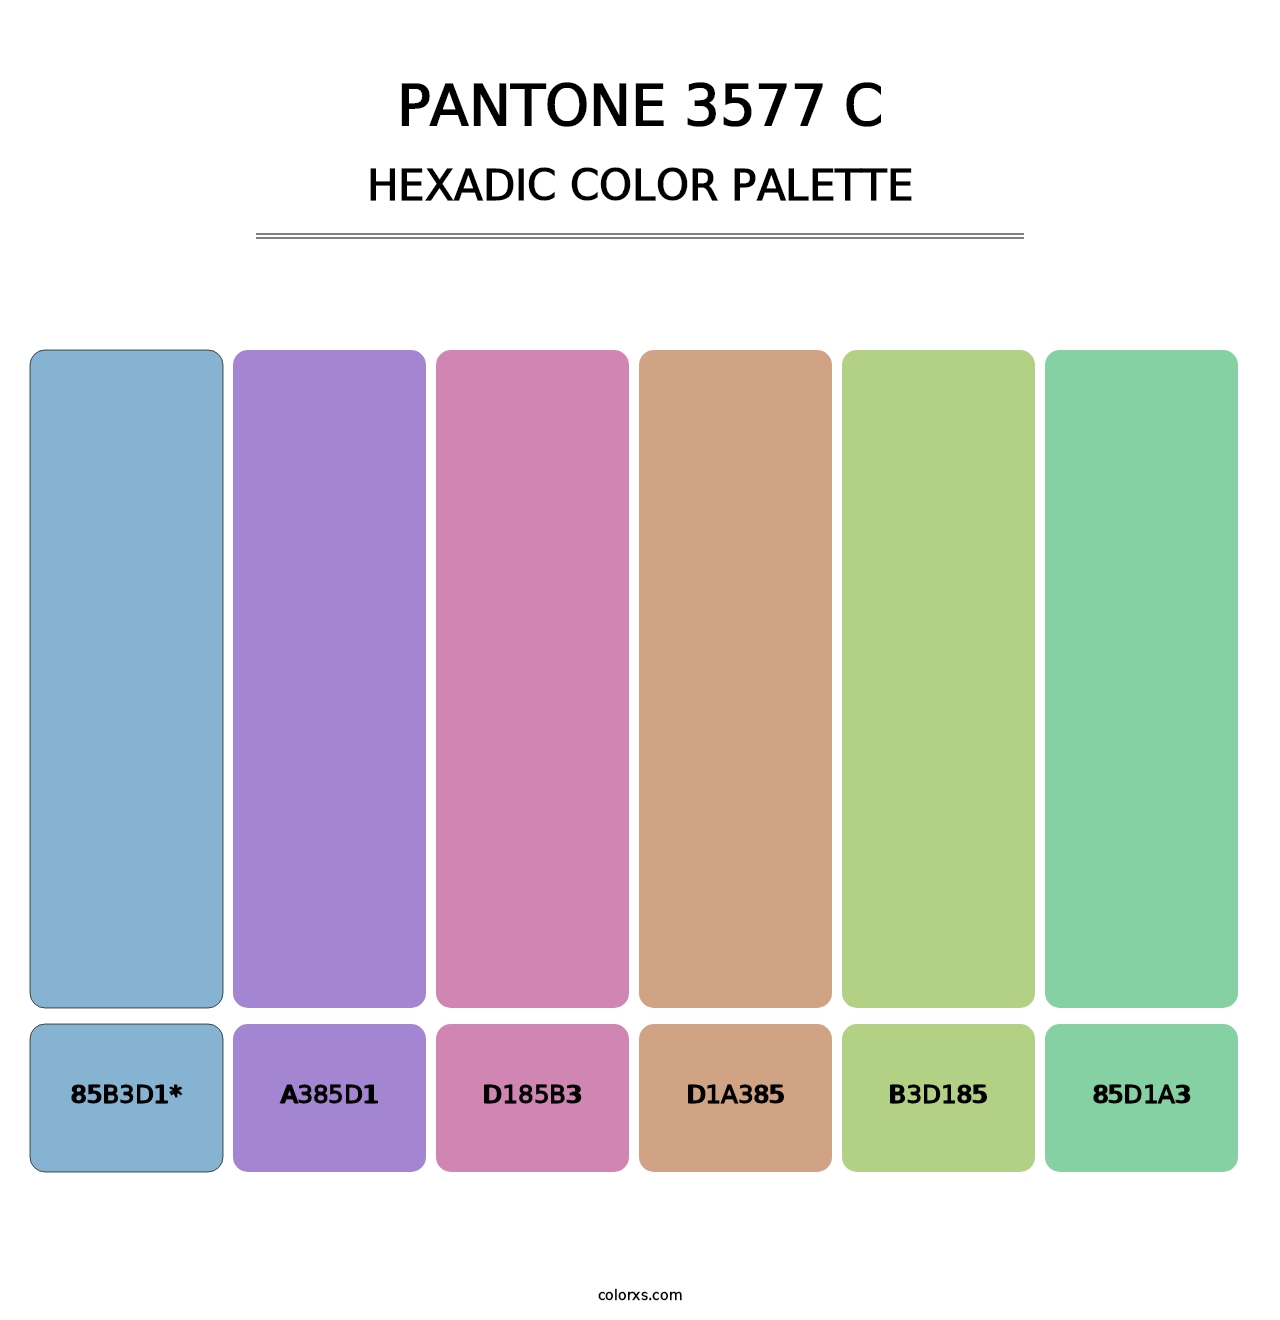 PANTONE 3577 C - Hexadic Color Palette